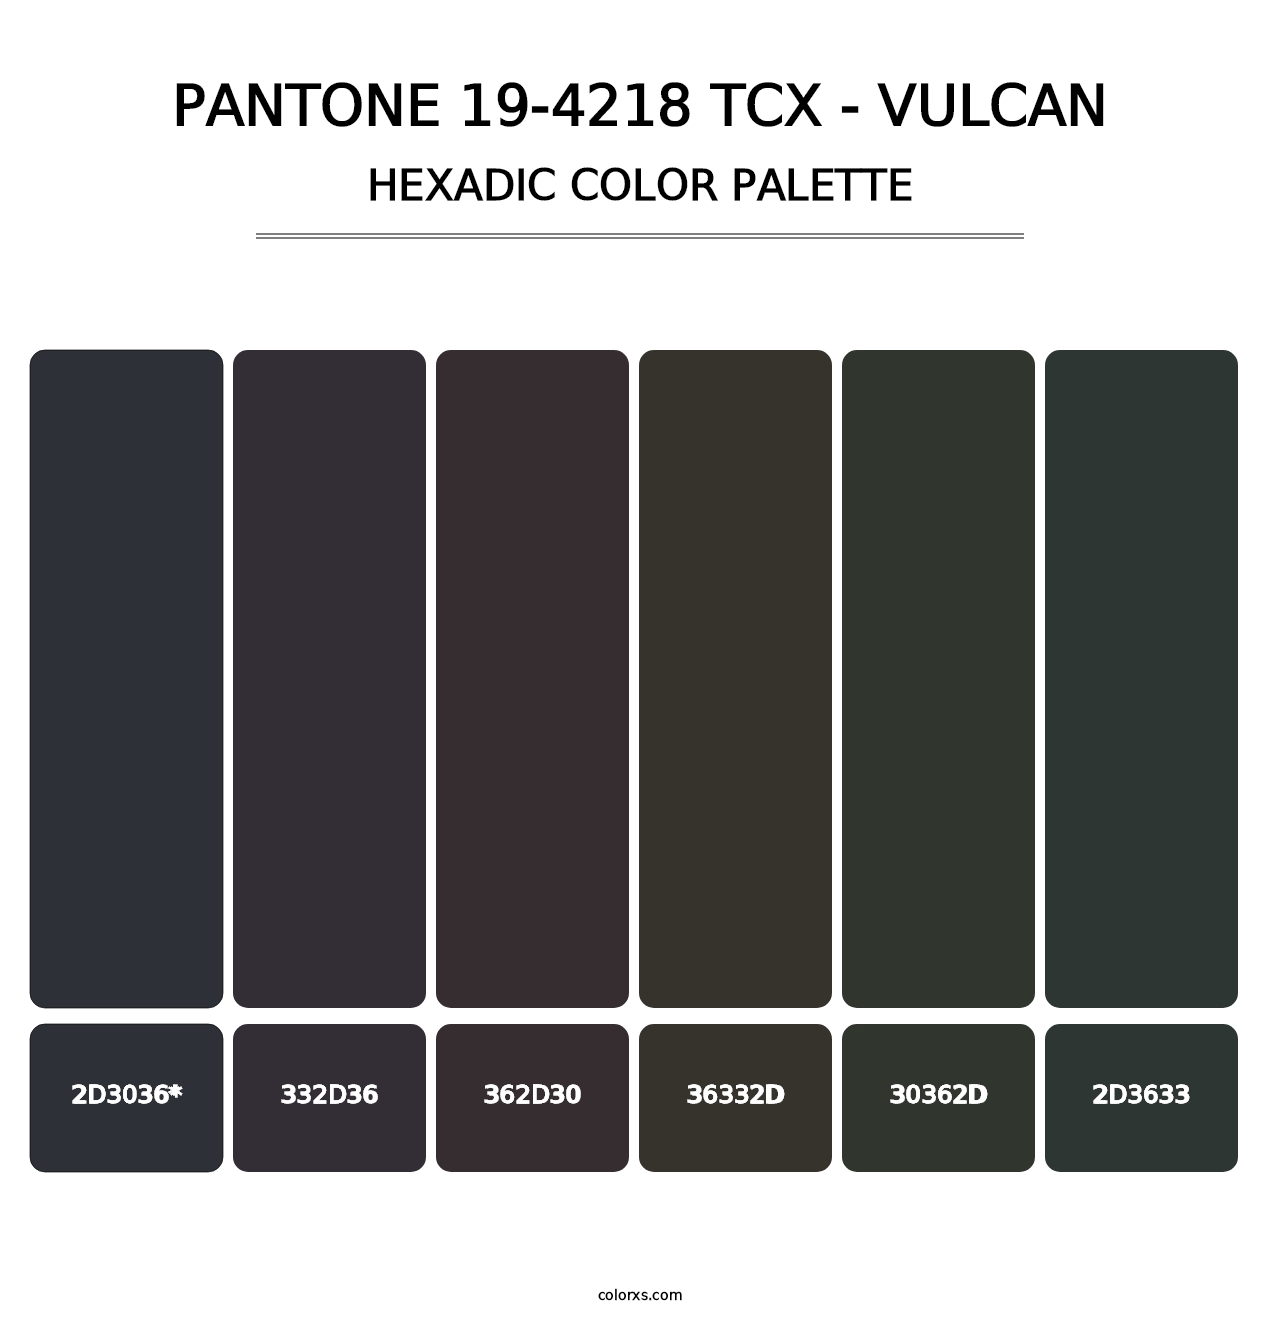 PANTONE 19-4218 TCX - Vulcan - Hexadic Color Palette